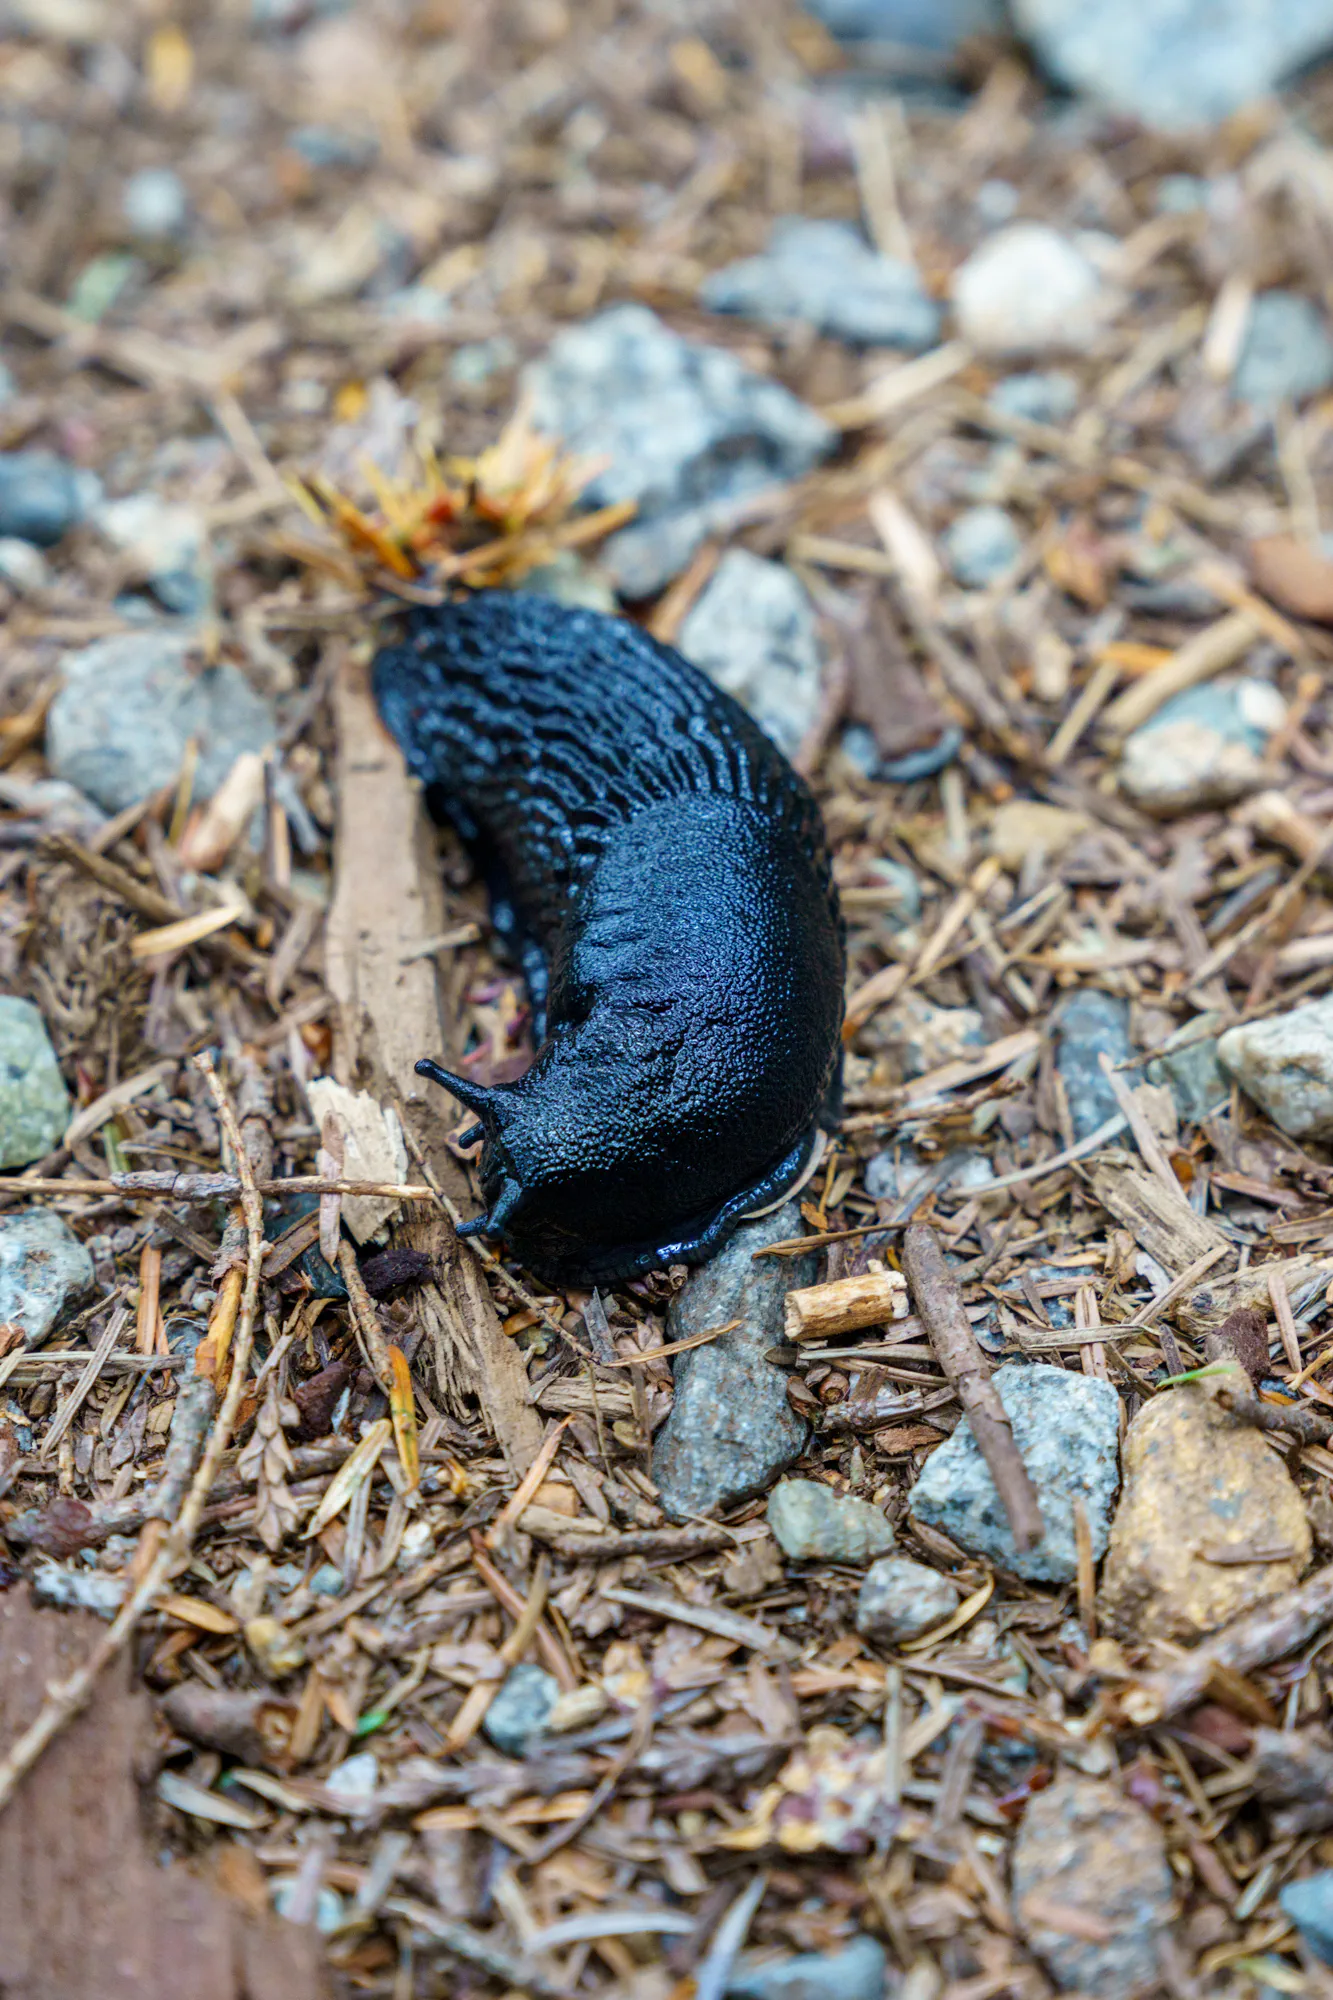 The Invasive Black Slug